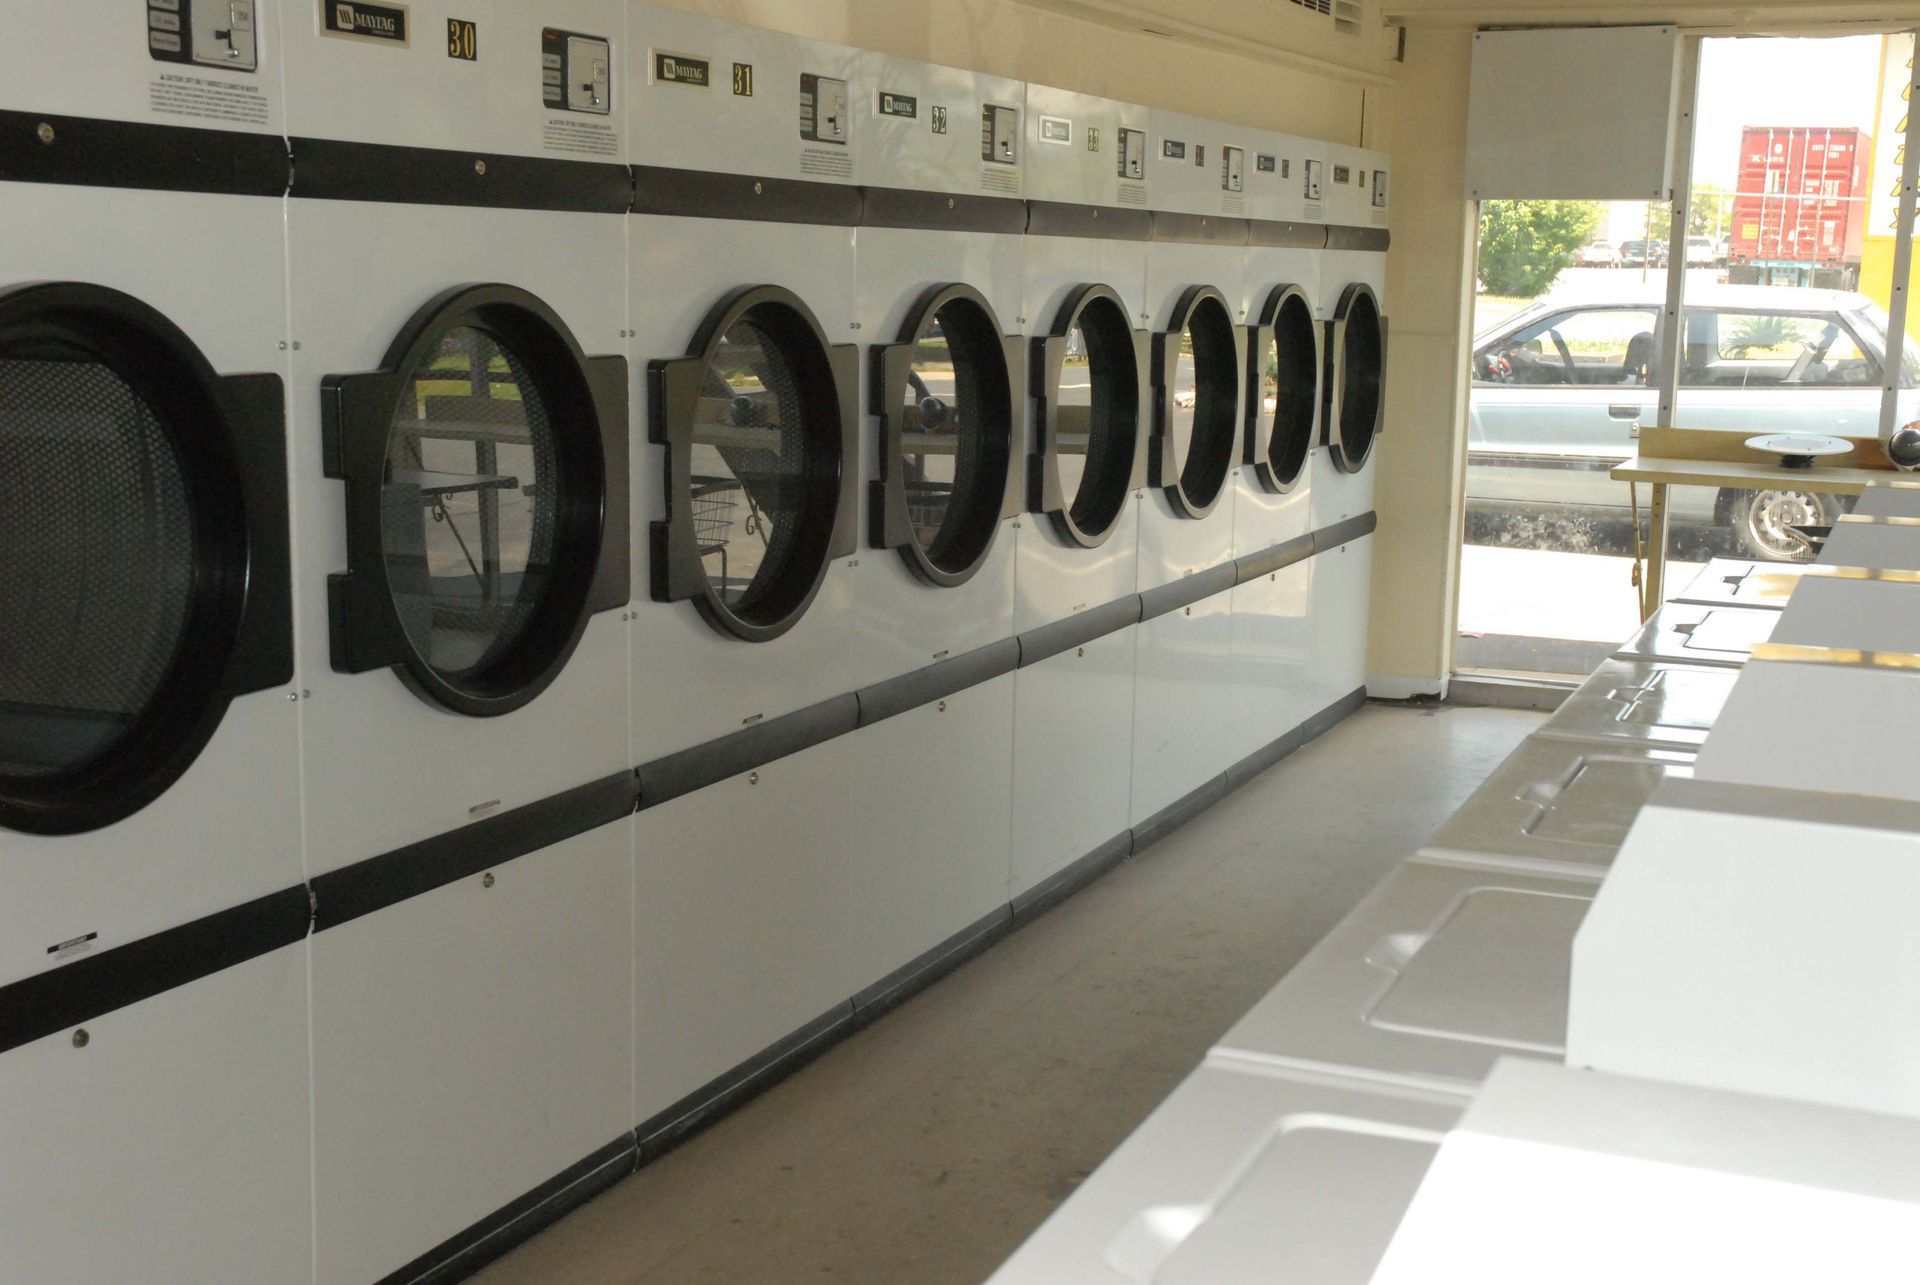 self-service laundromat